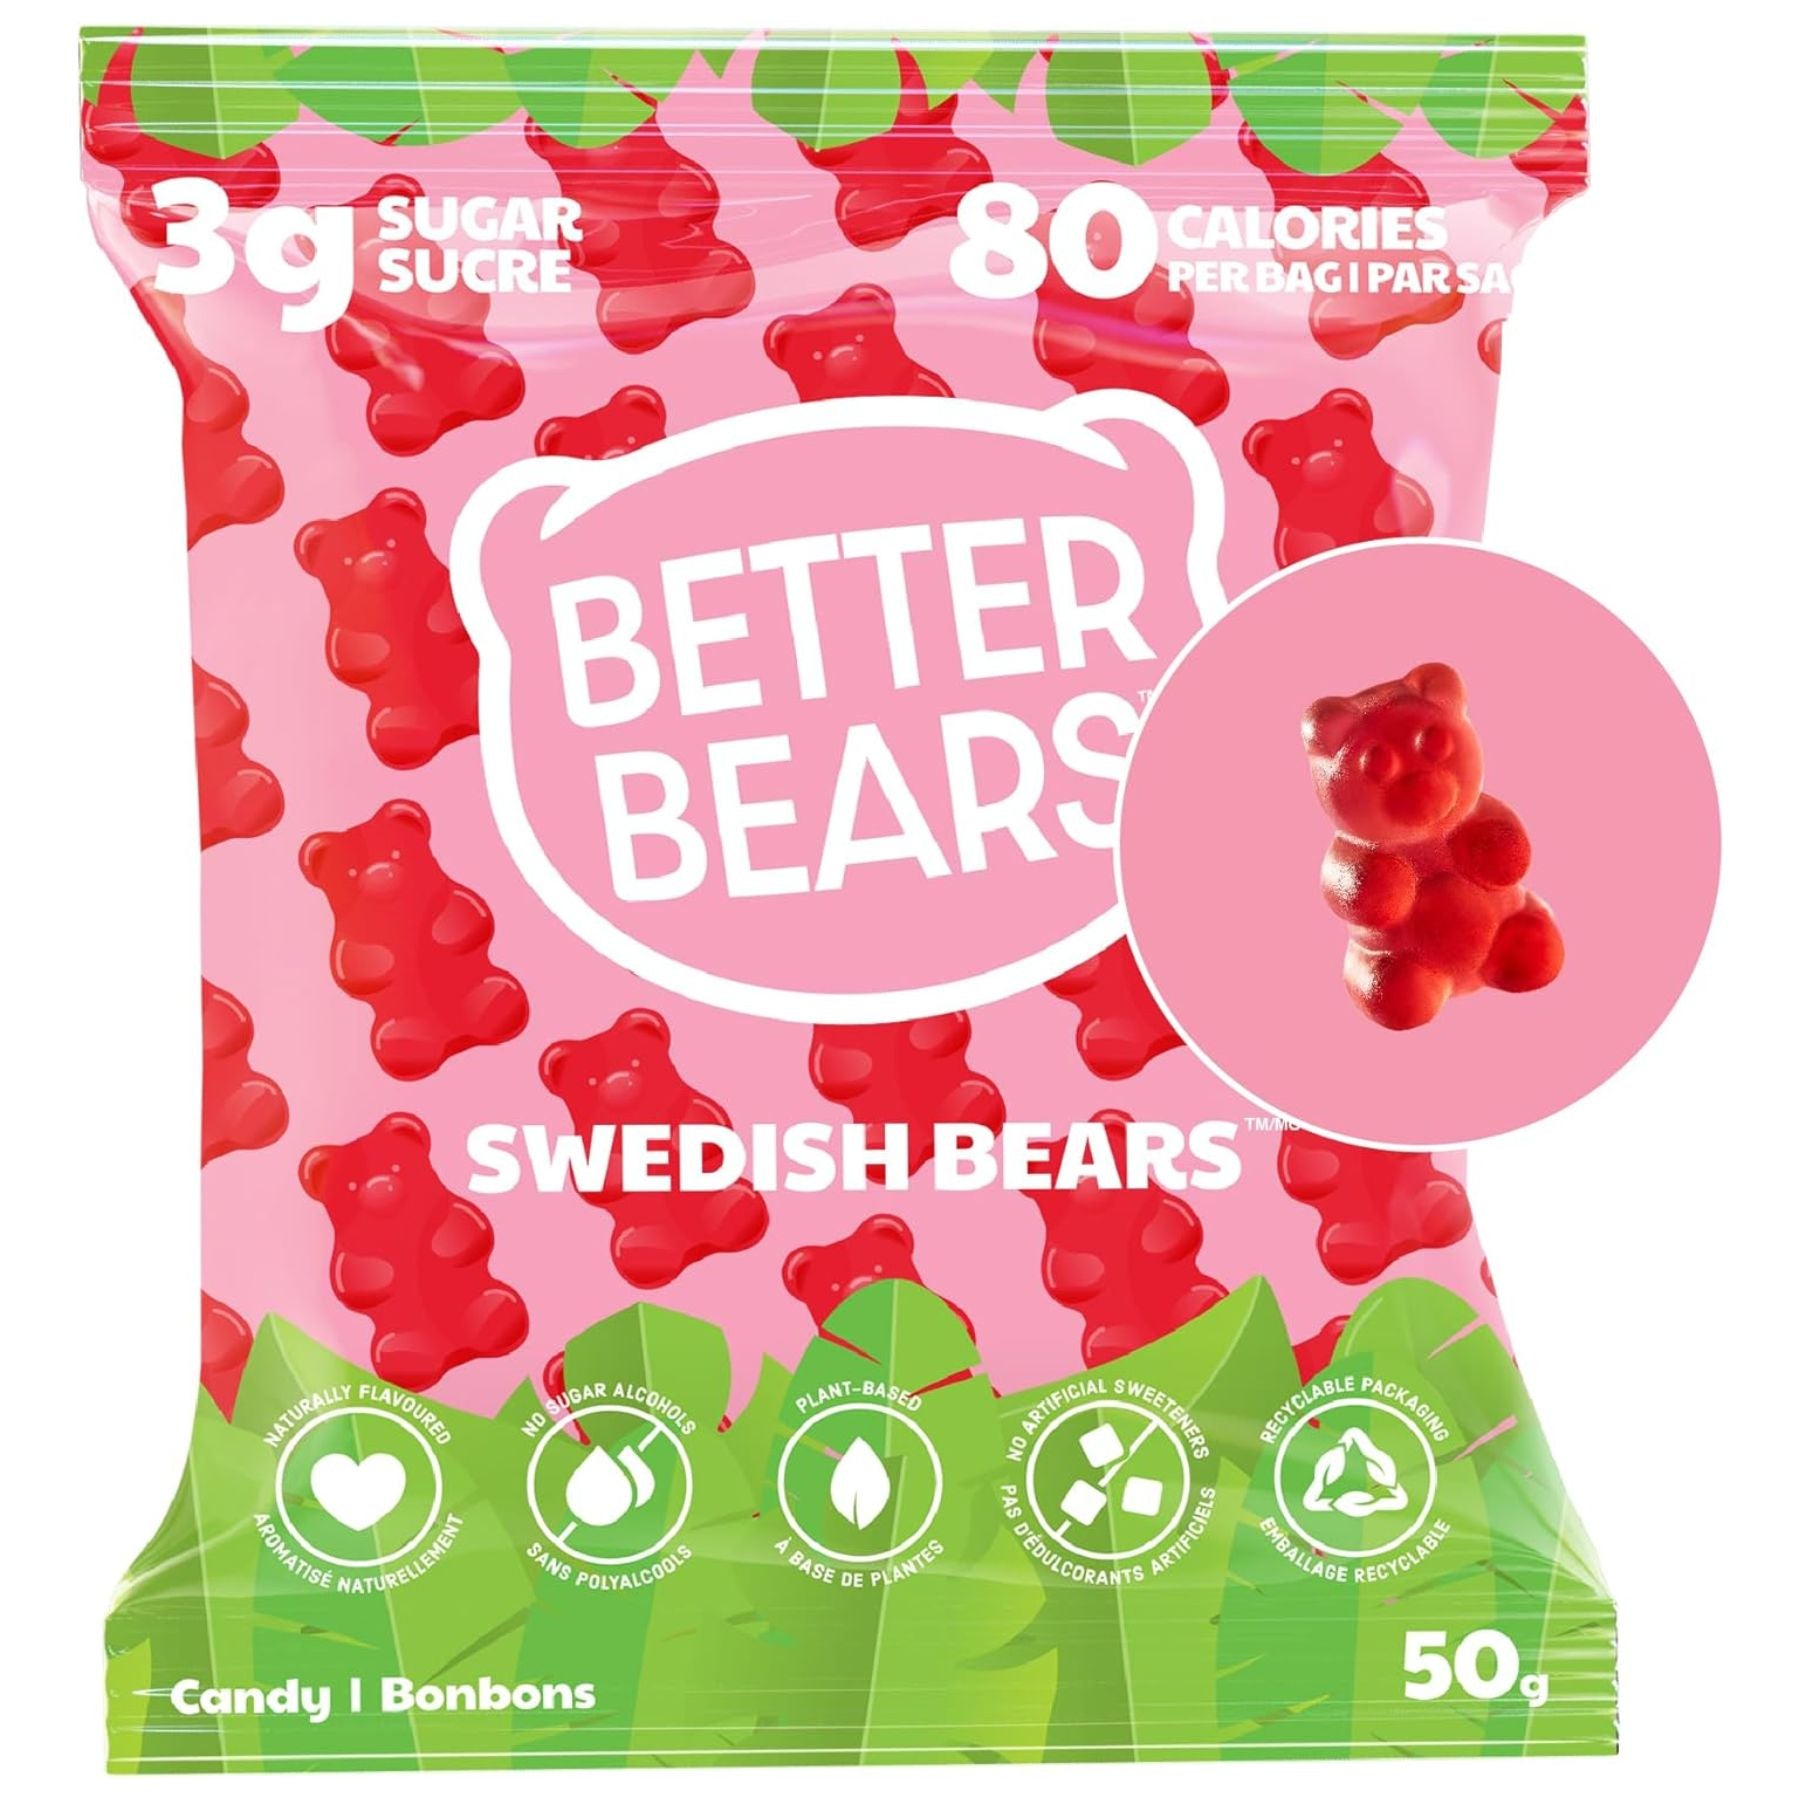 Better Bears Swedish Bears  50g